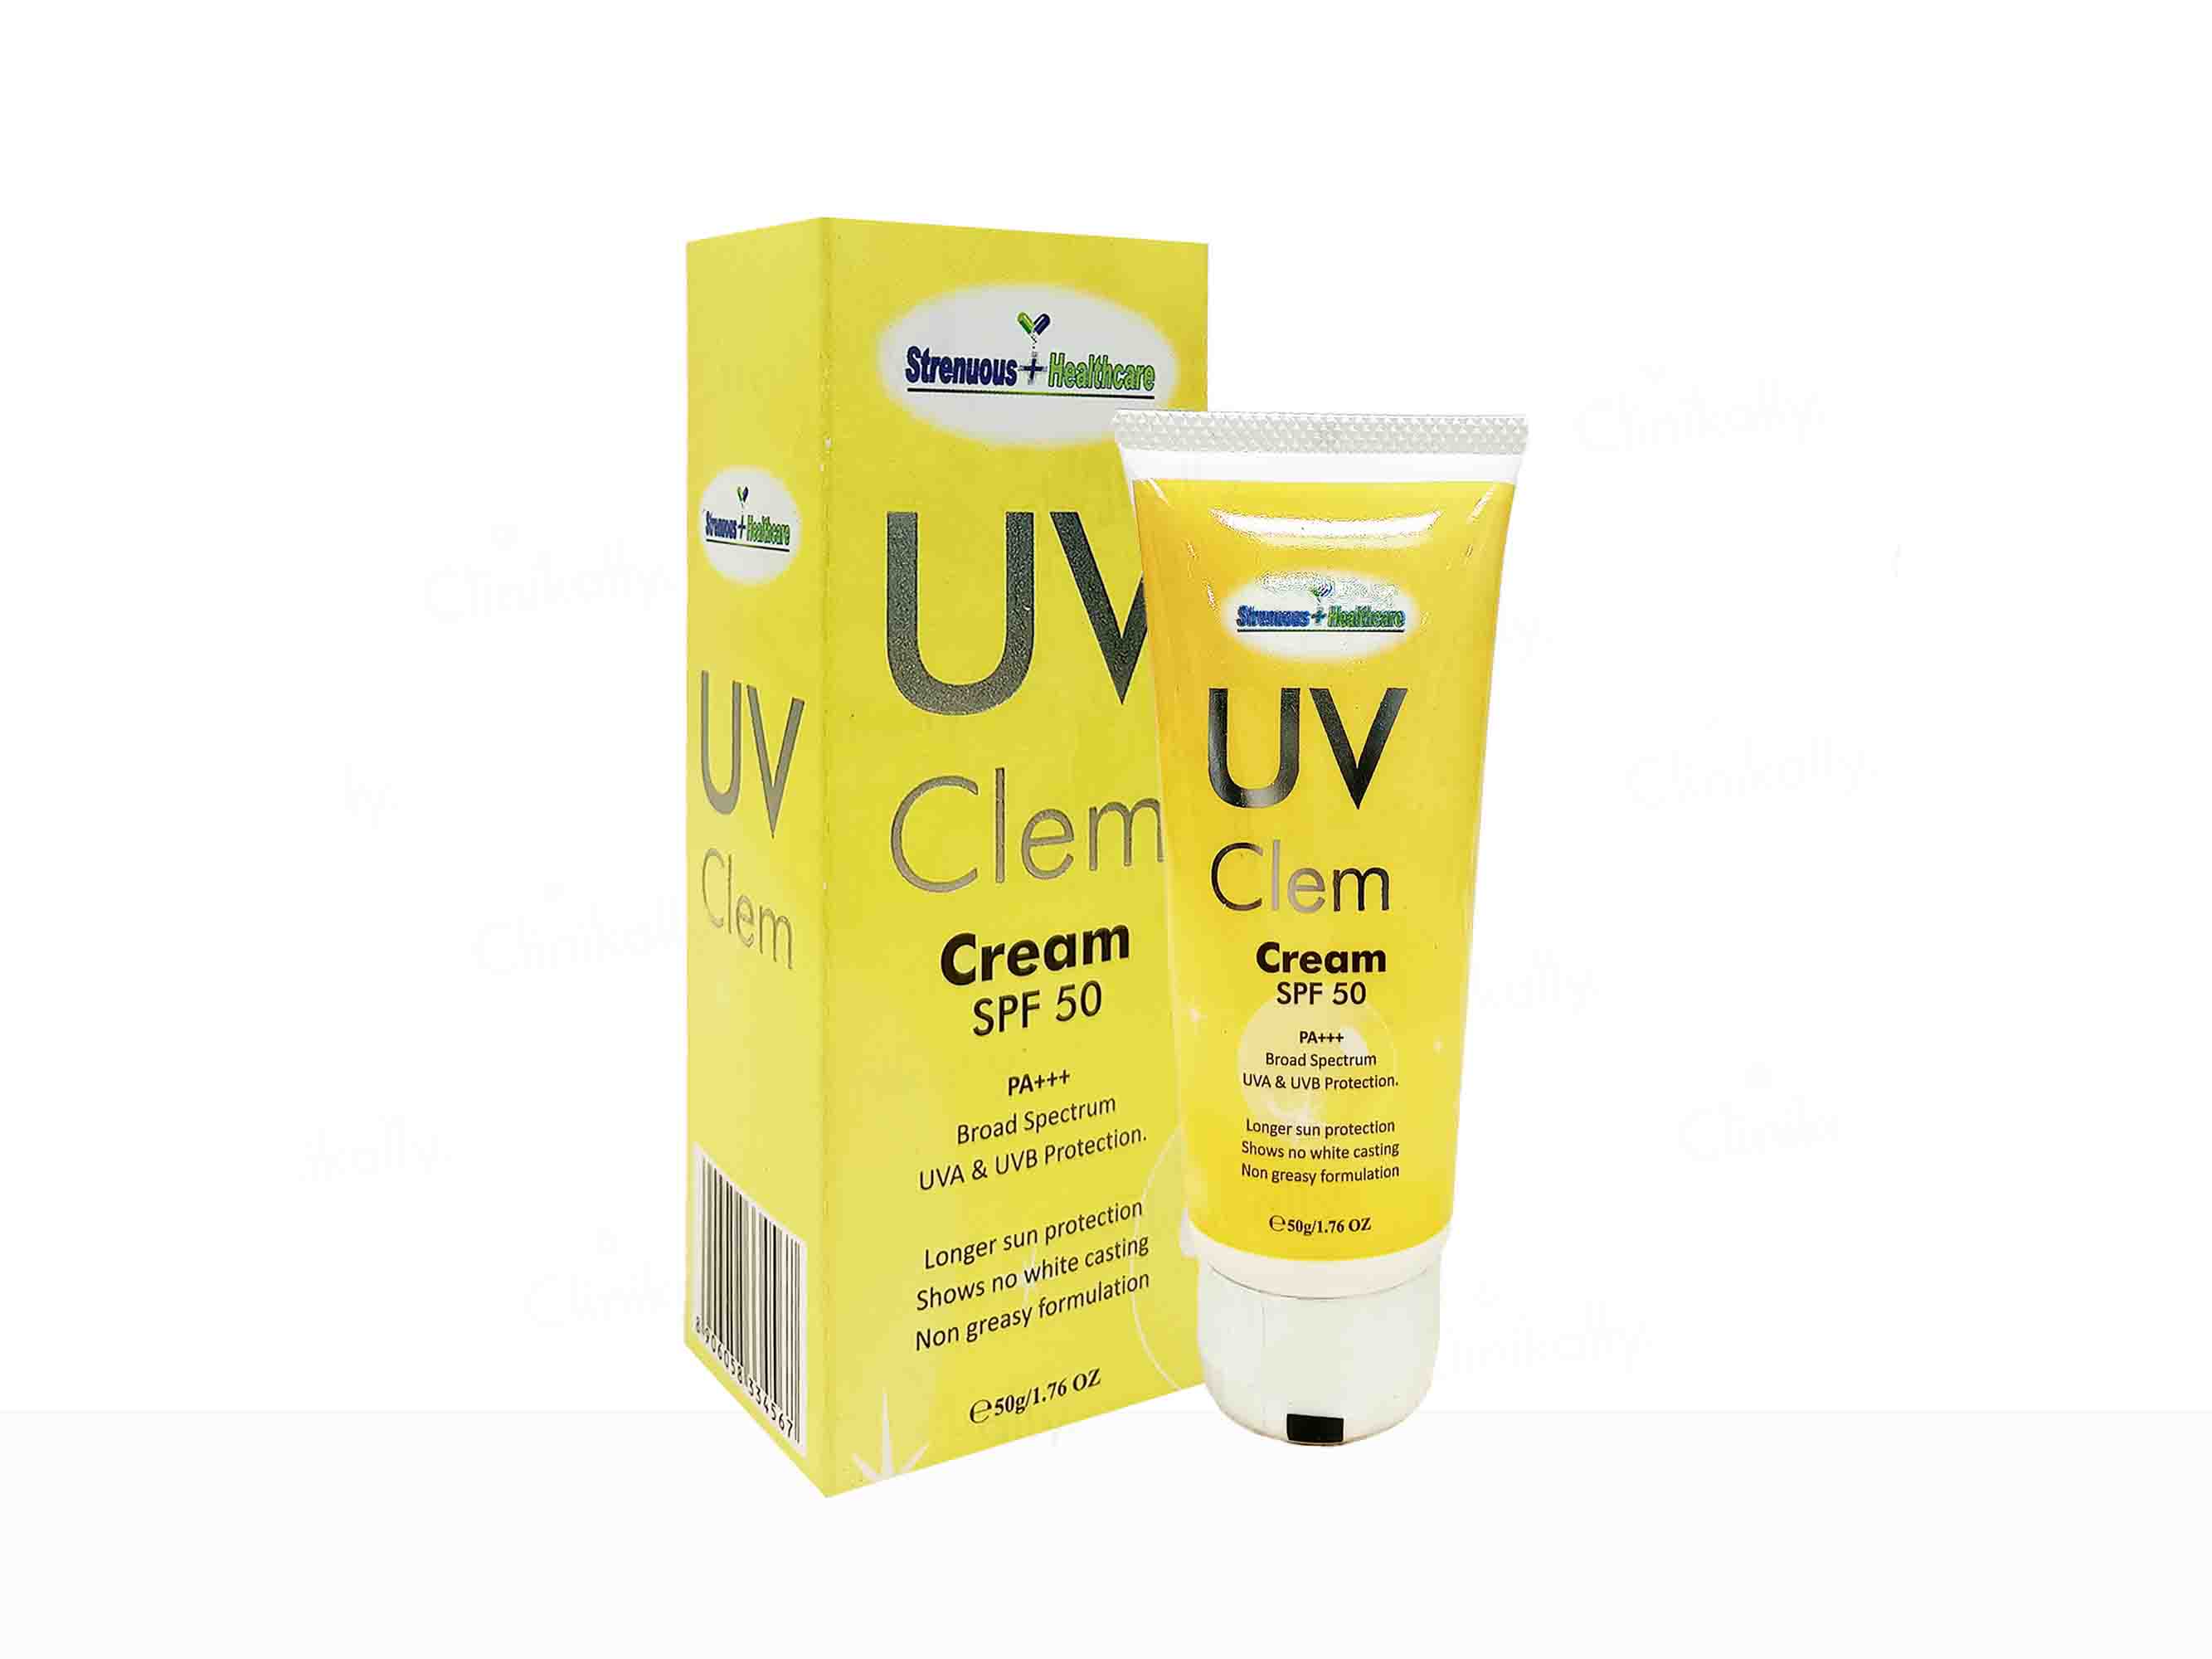 UV Clem Cream SPF 50 PA+++